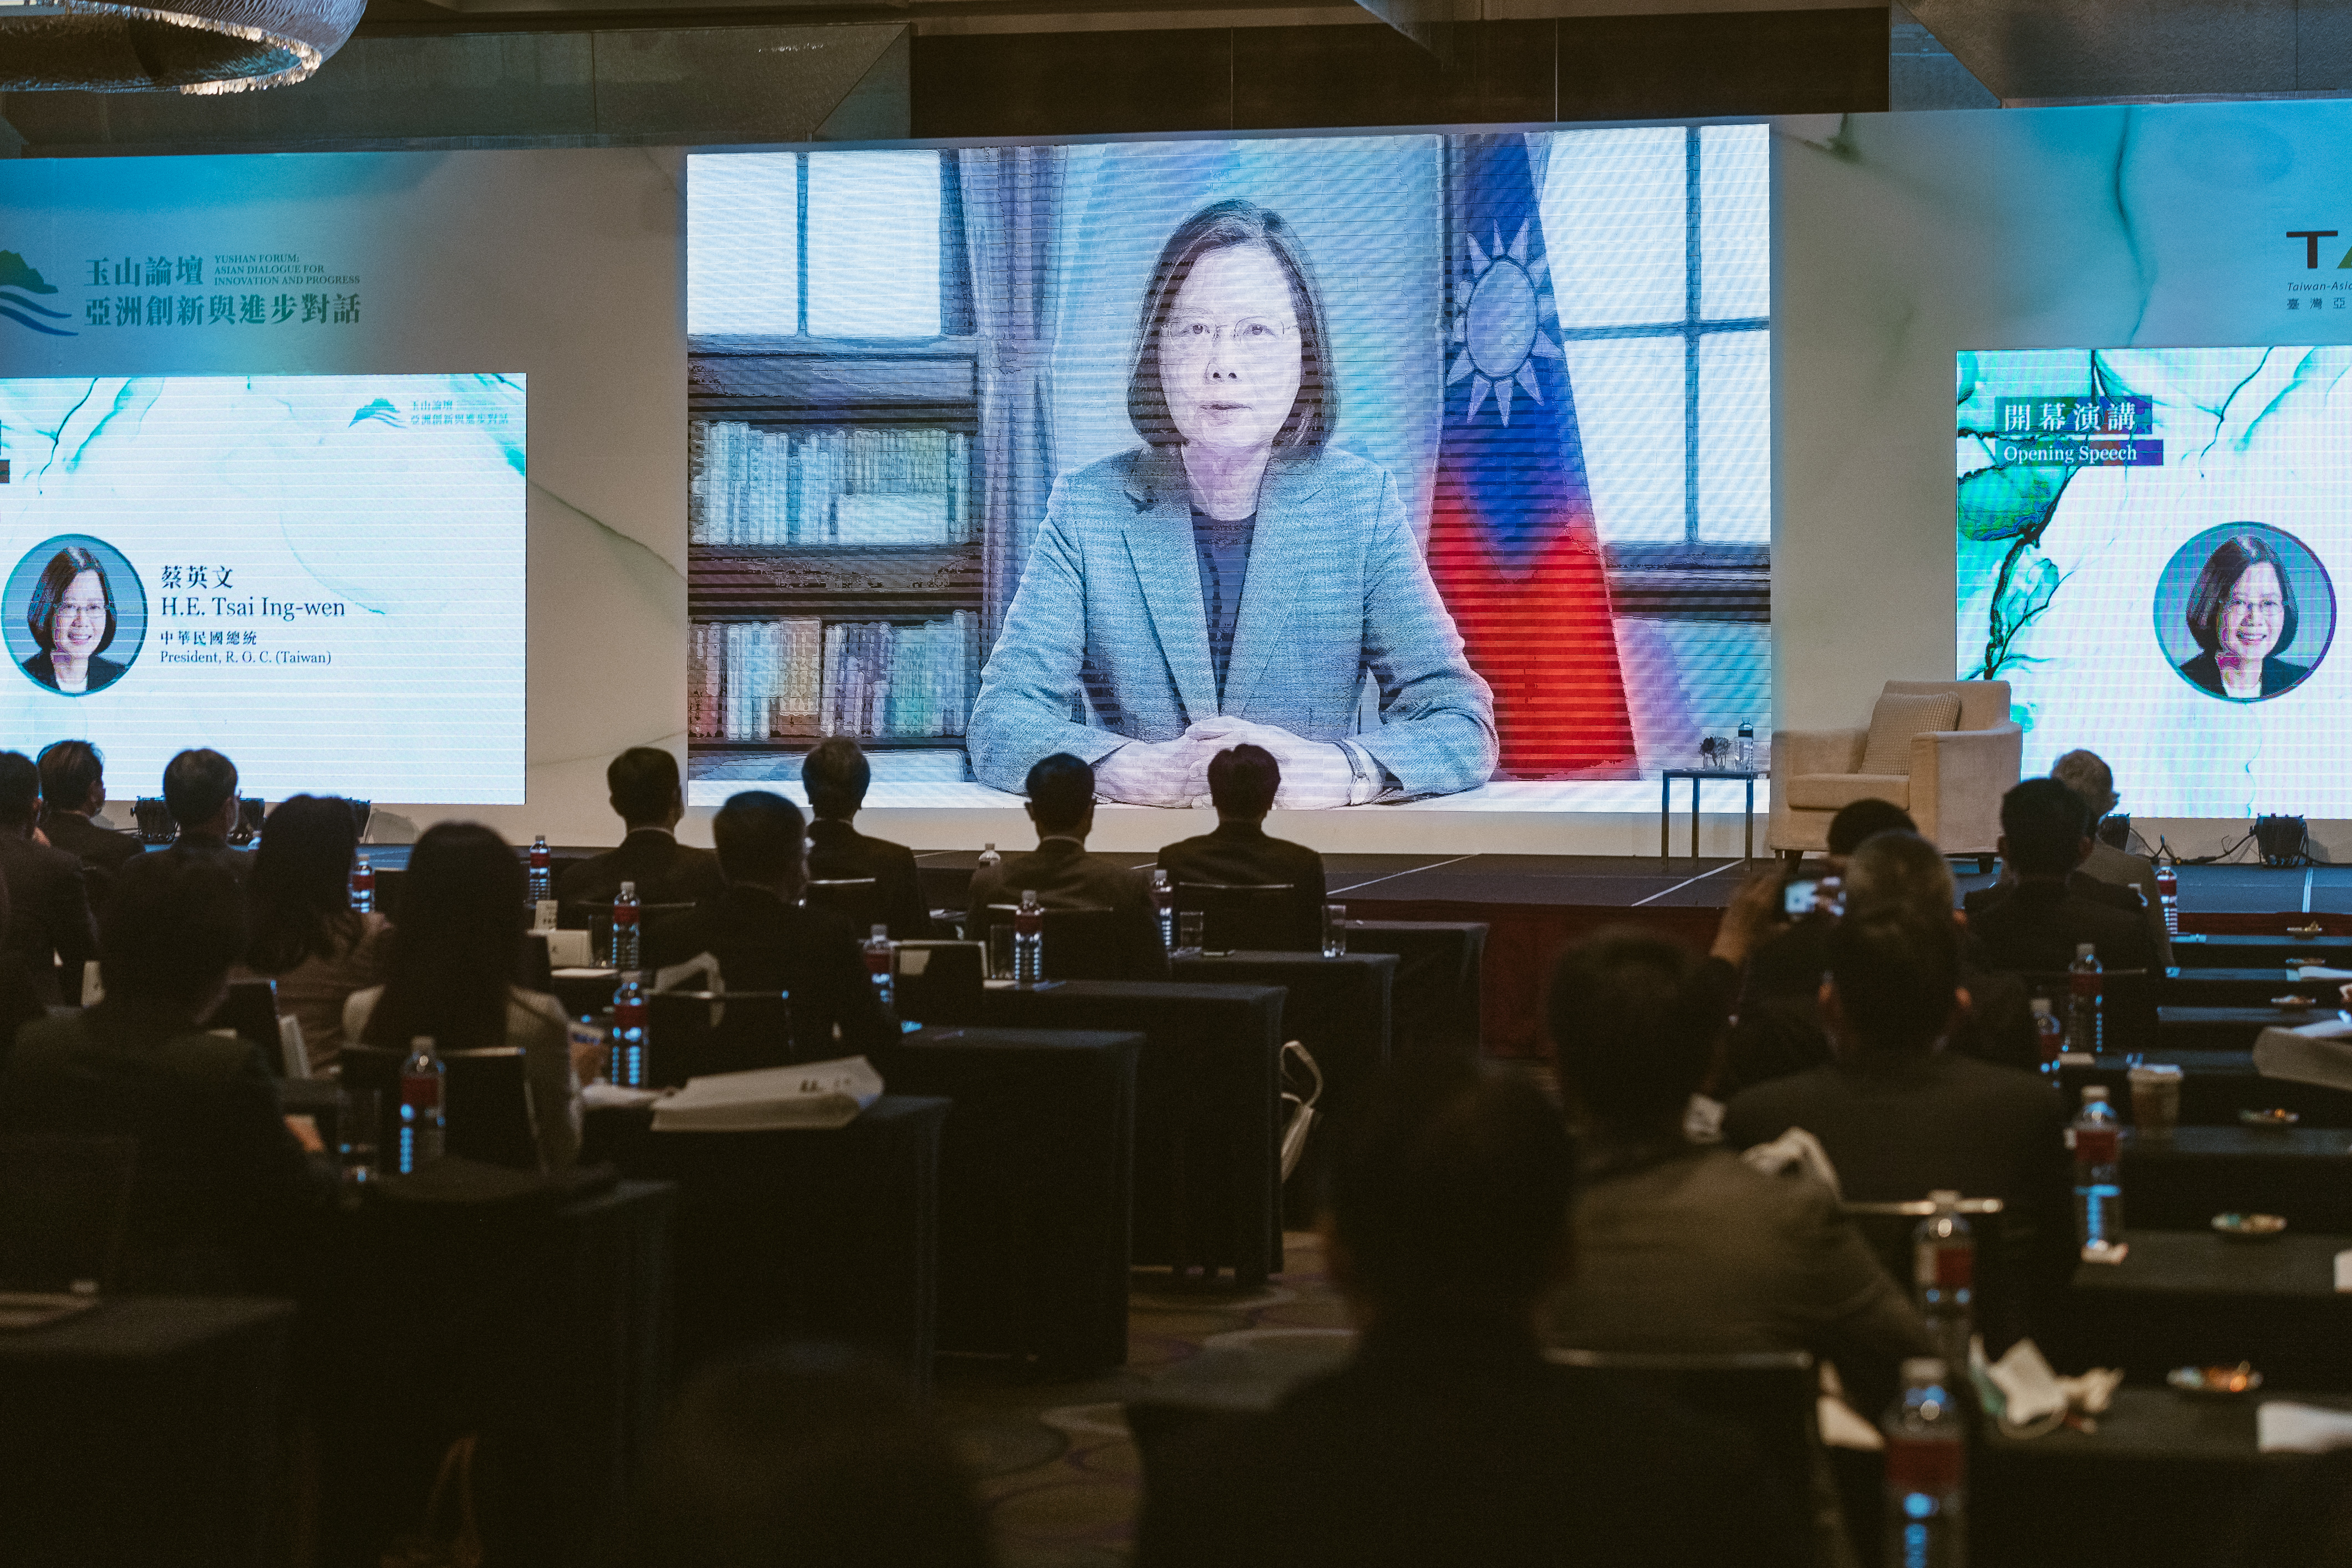 H.E. Tsai Ing-Wen, President of R.O.C. (Taiwan) gives opening remarks